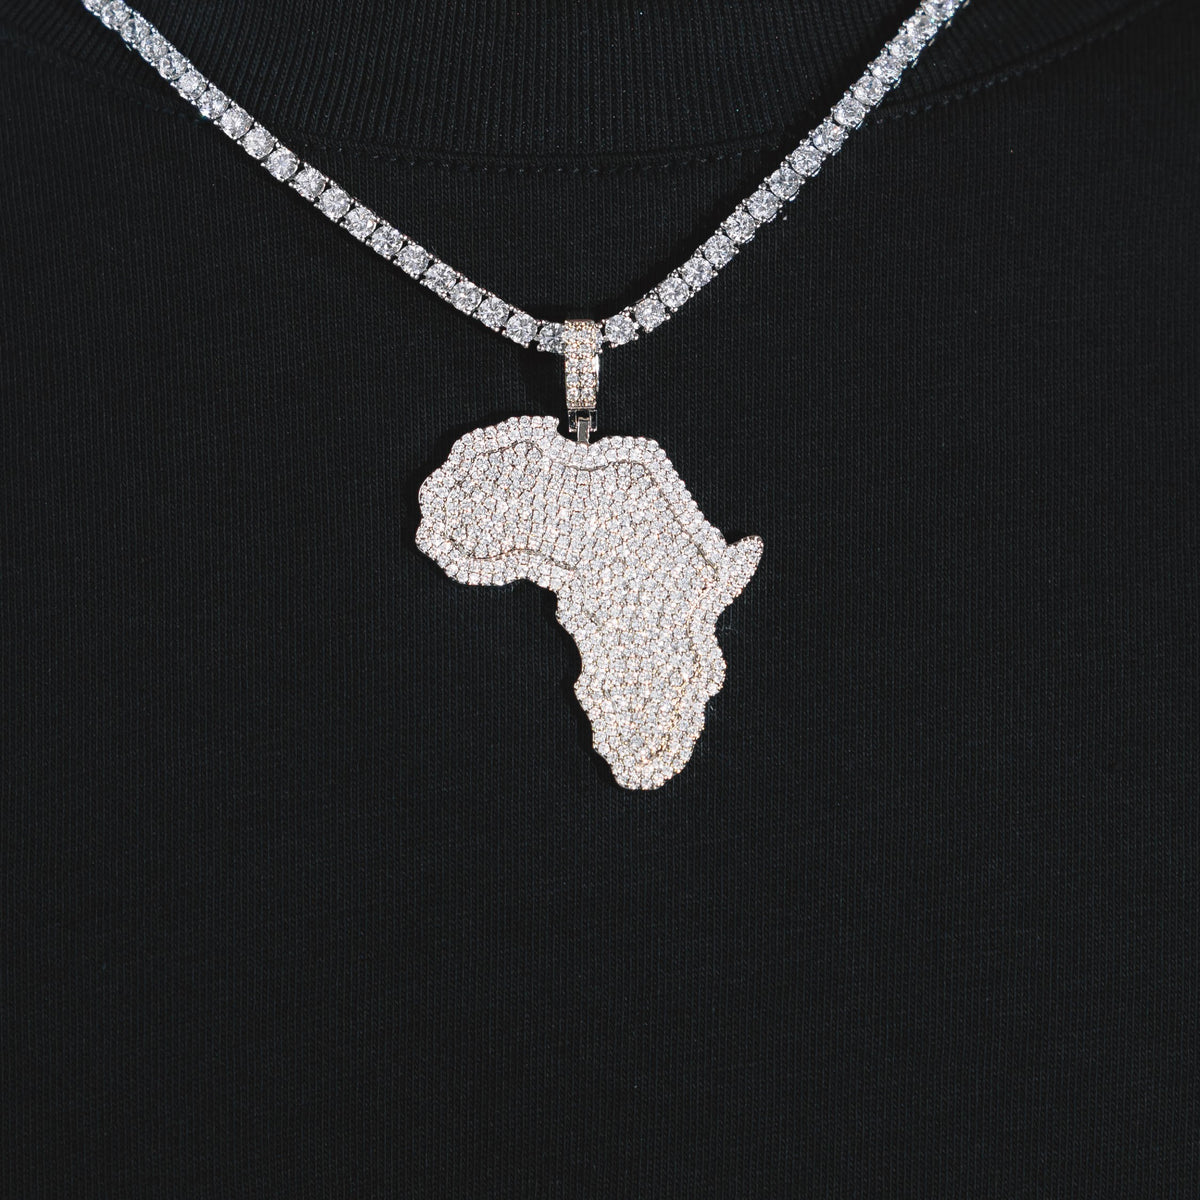 Africa Pendant White Gold